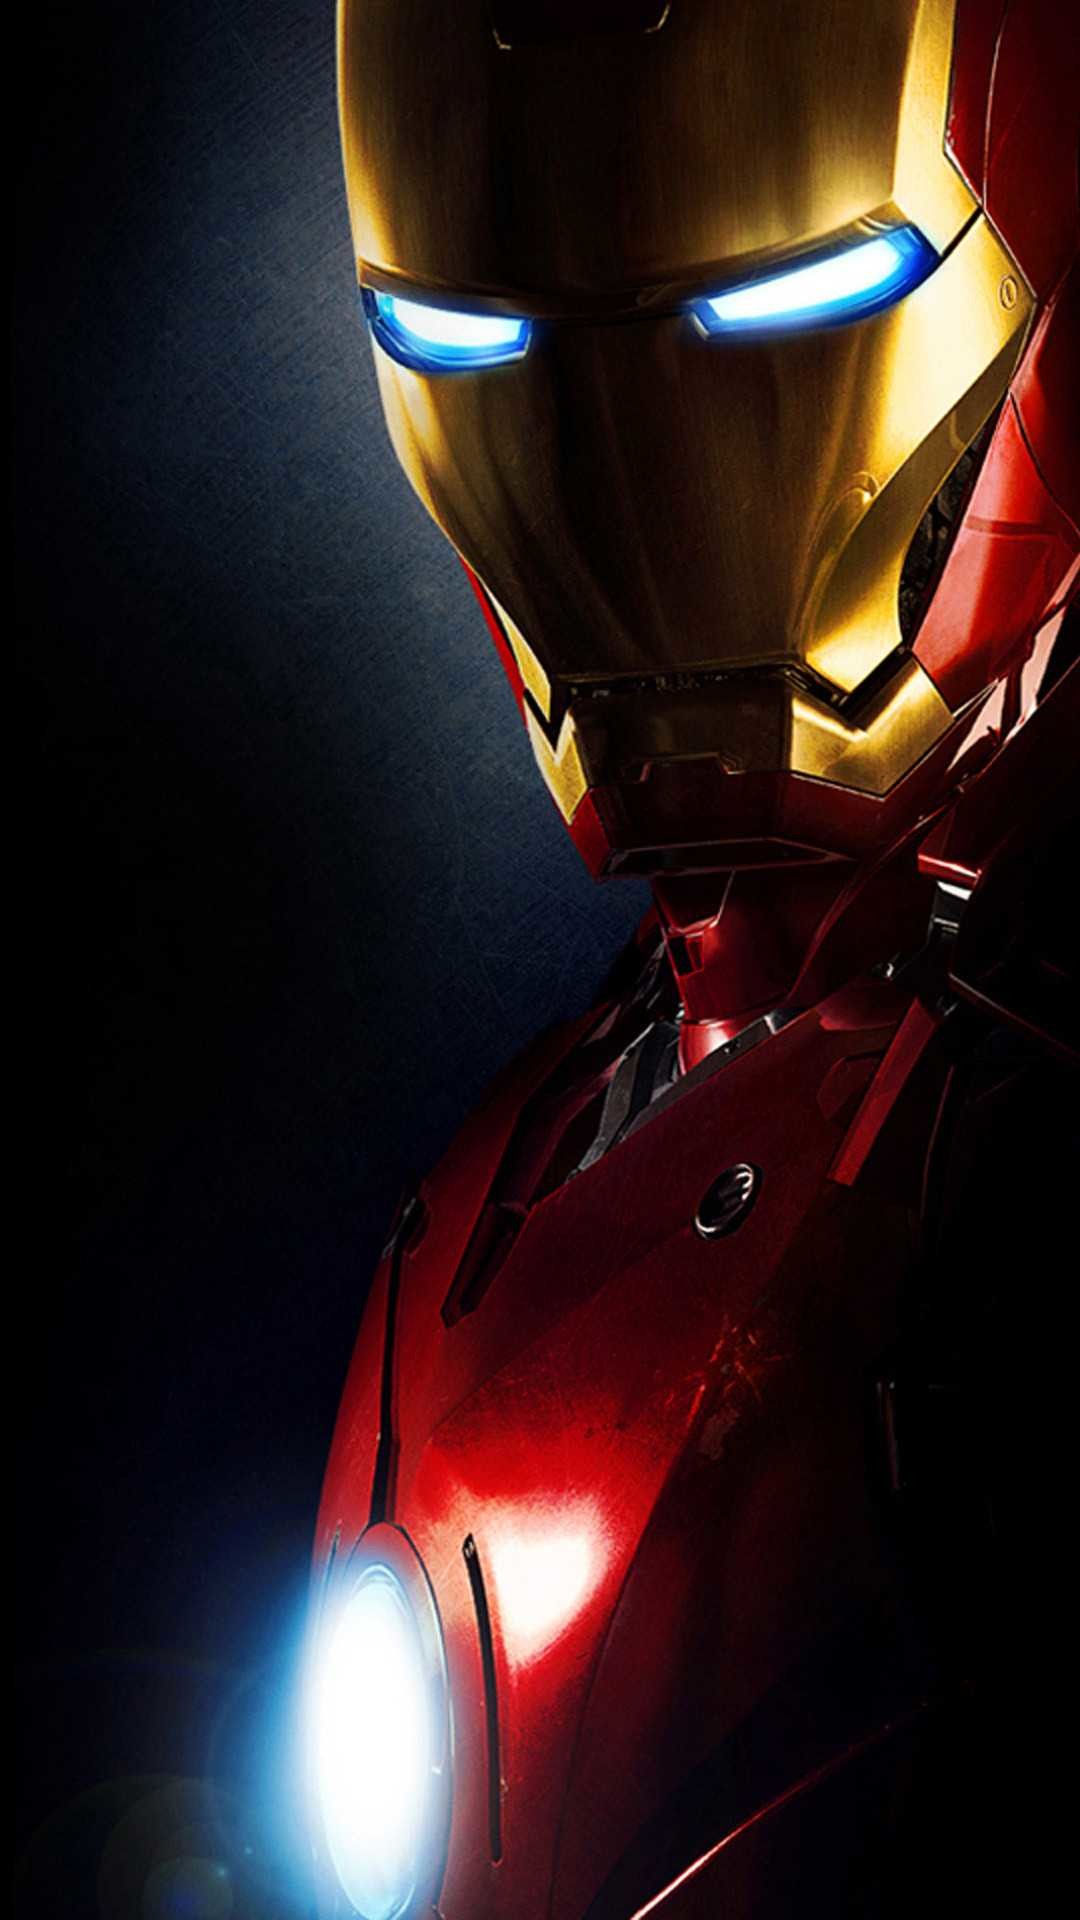 Iron Man Wallpaper IPhone (93+ images)